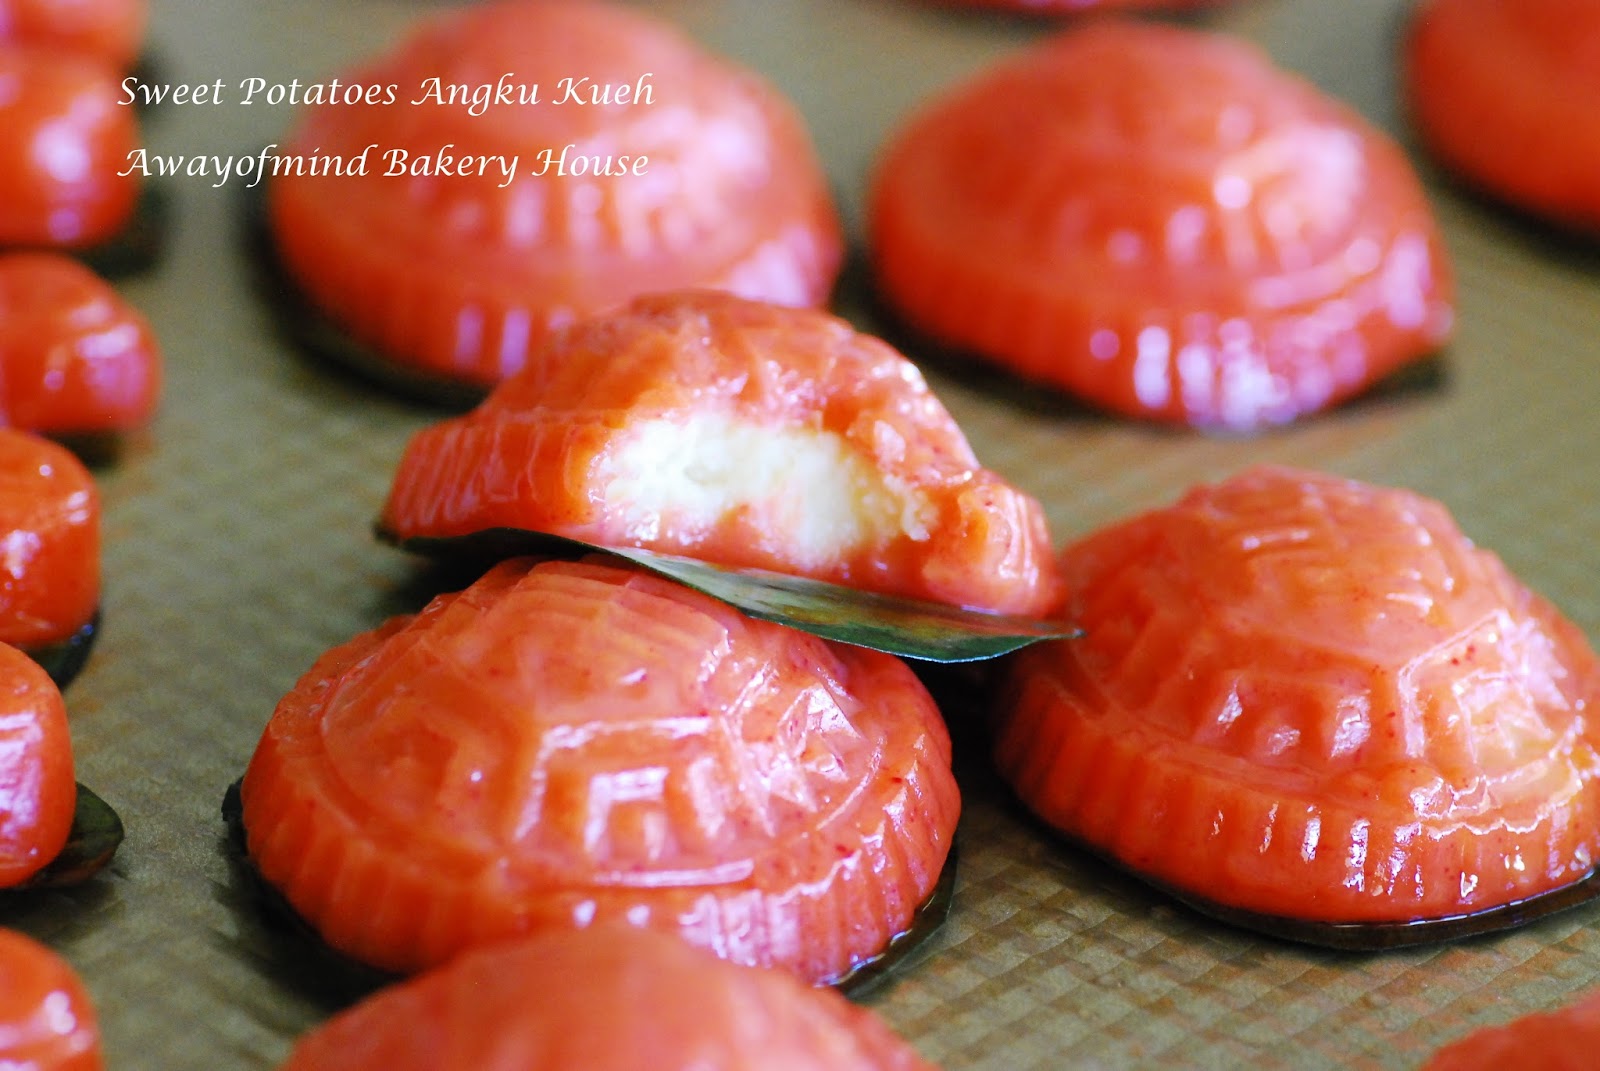 Awayofmind Bakery House: Sweet Potatoes Angku Kueh (Red 